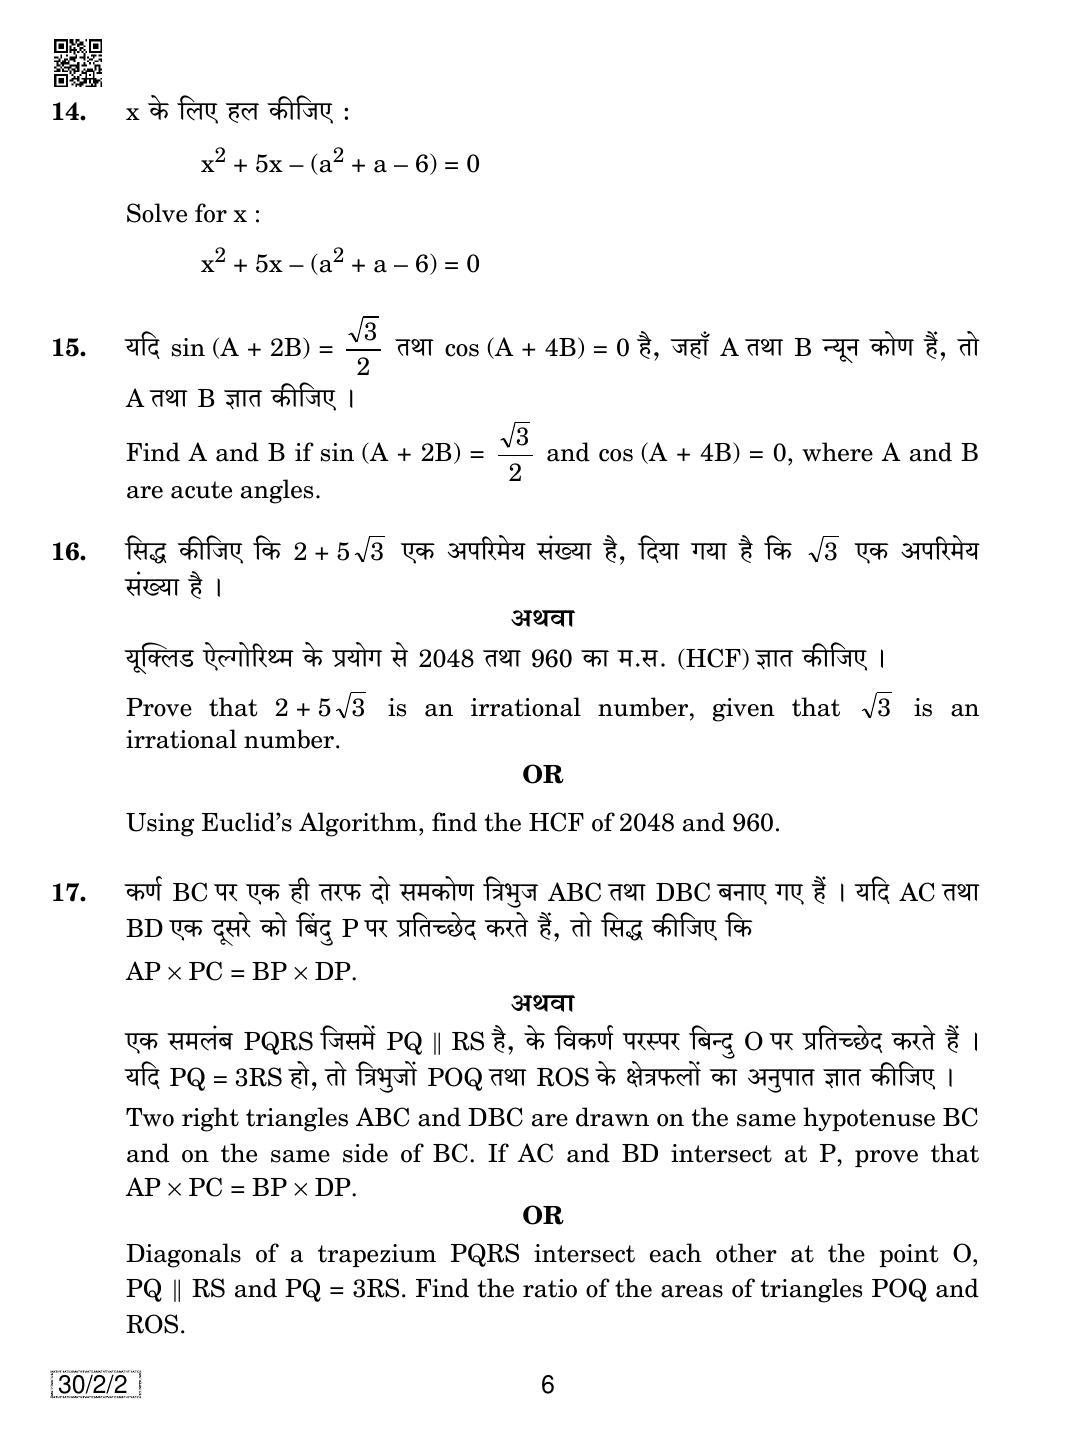 CBSE Class 10 Maths (30/2/2 - SET 2) 2019 Question Paper - Page 6